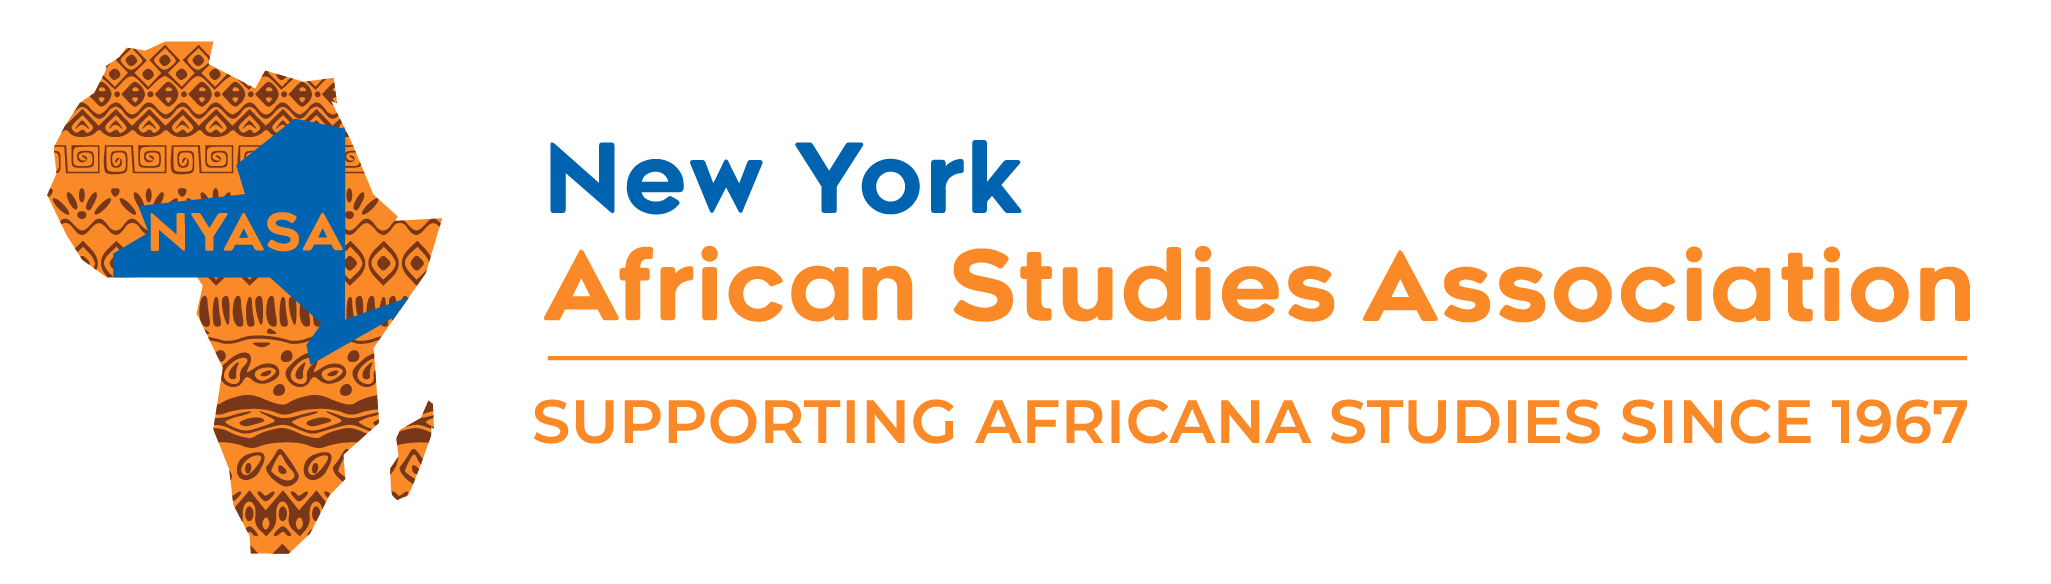 Conferences New York African Studies Association